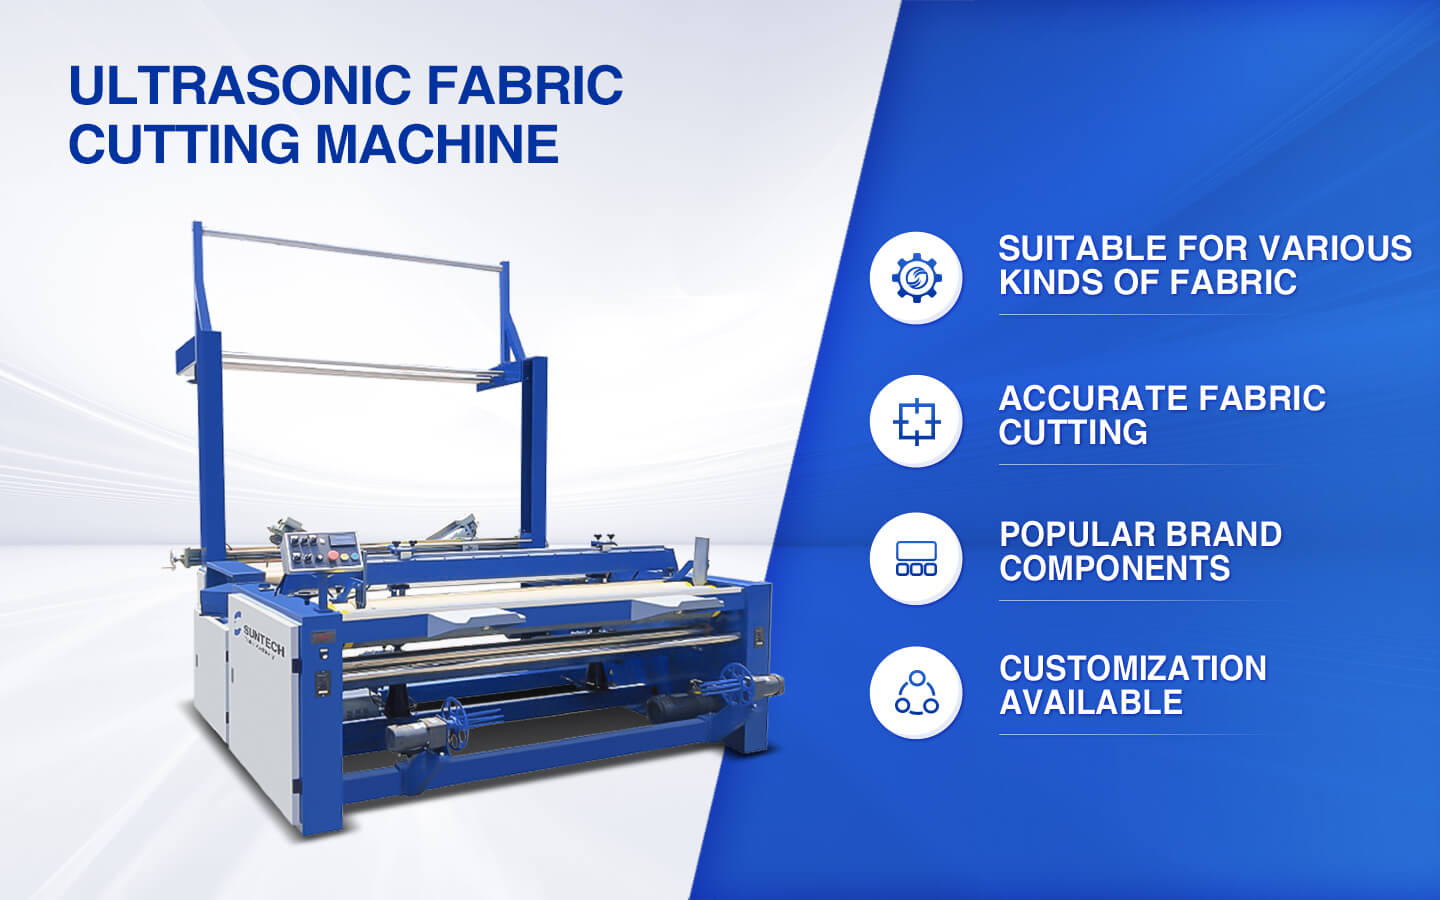 Ultrasonic Fabric Cutting Machine features